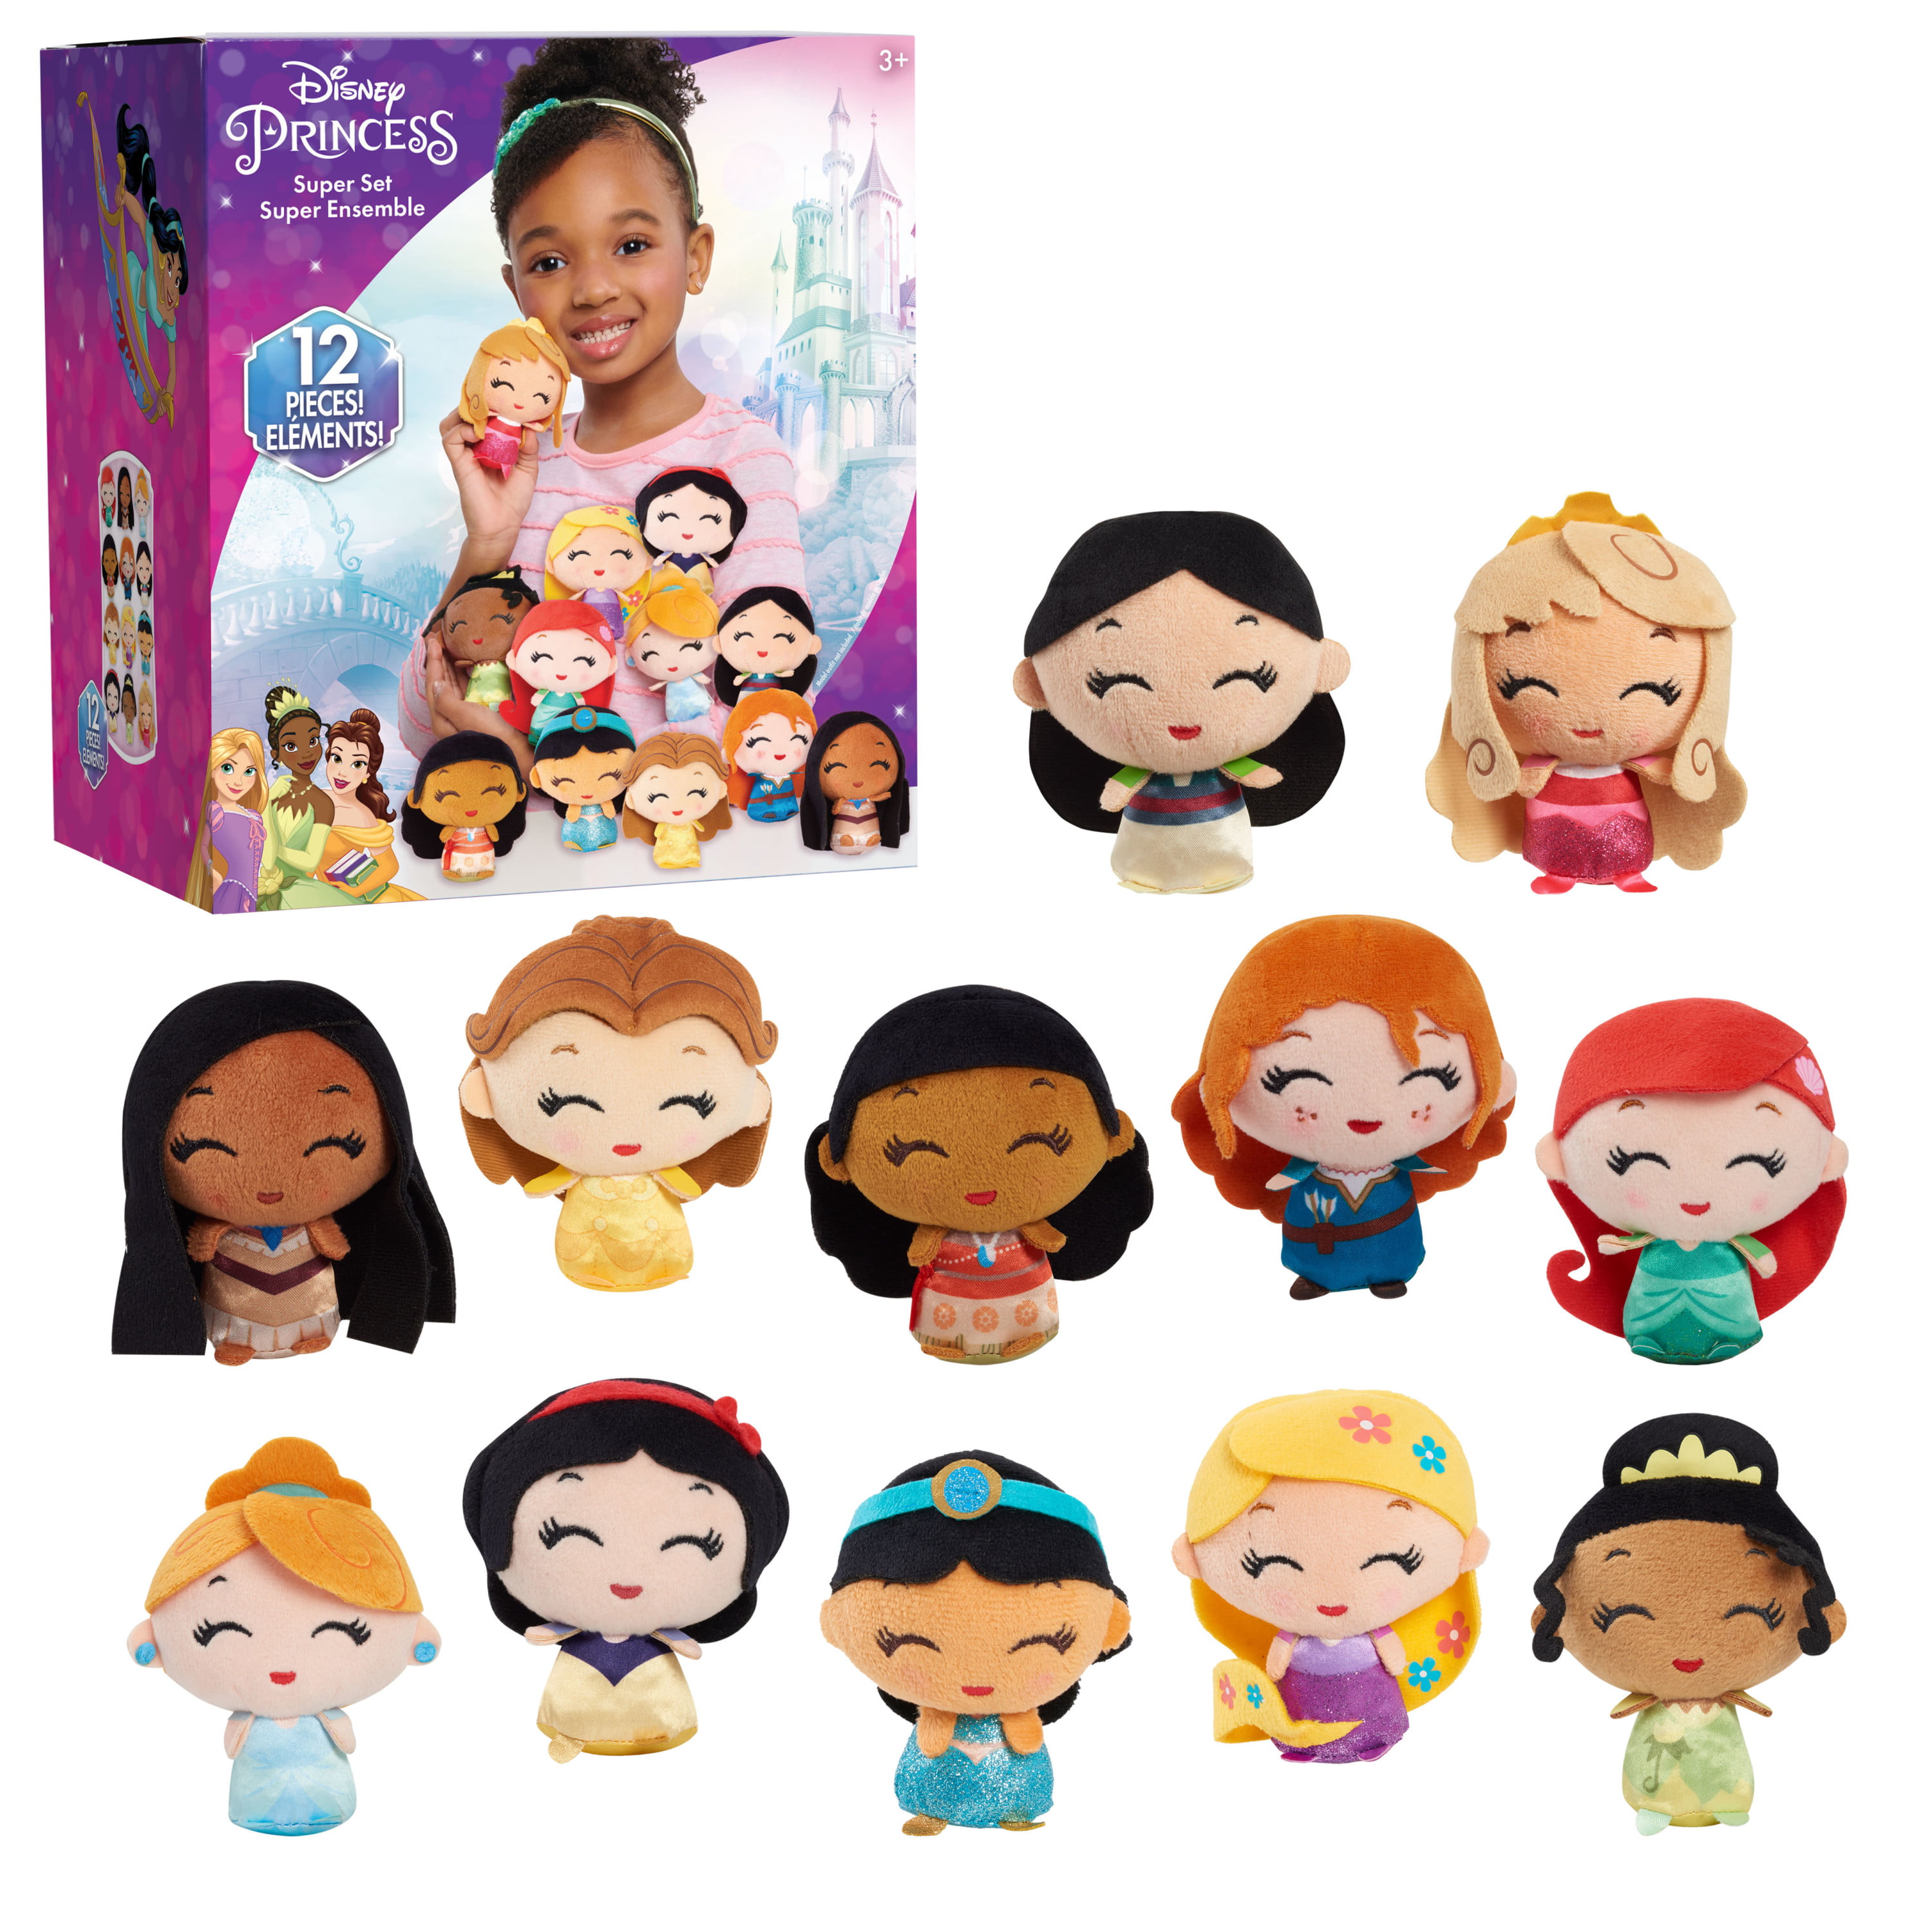 12-Ct 3.5" Disney Princess Plush Figures Super Set $19.84 + Free S&H w/ Walmart+ or $35+